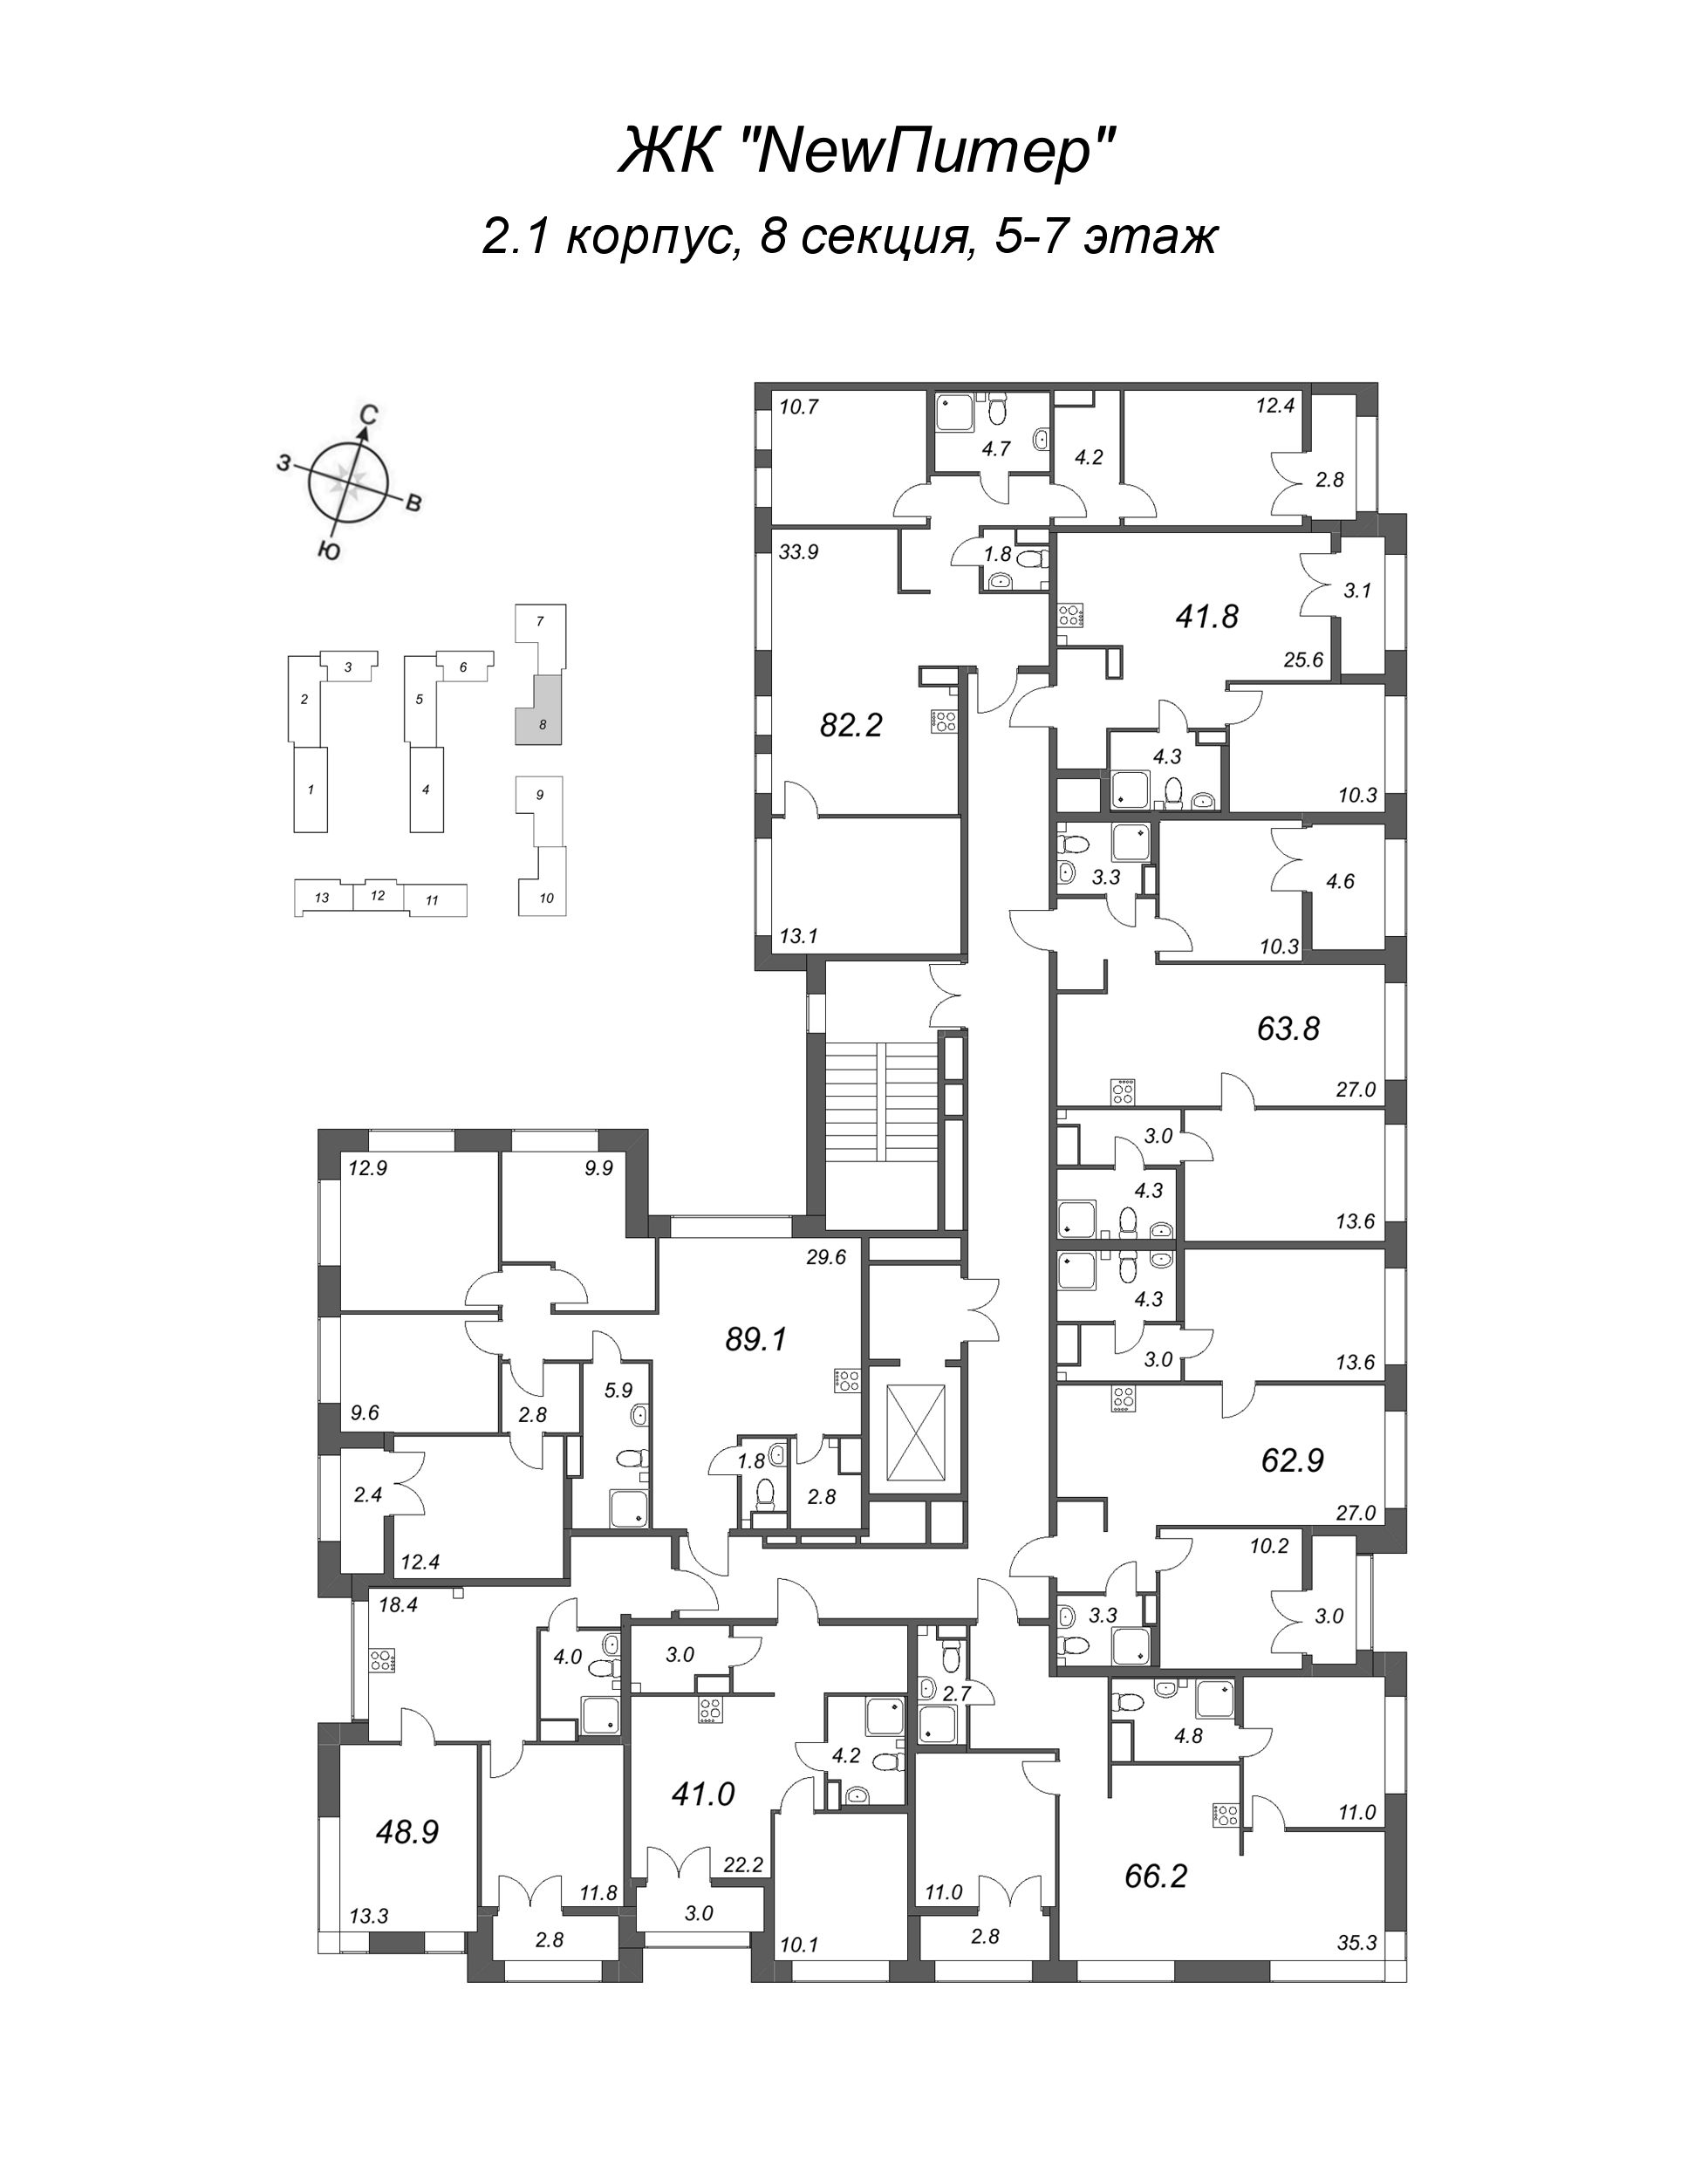 4-комнатная (Евро) квартира, 82.2 м² - планировка этажа